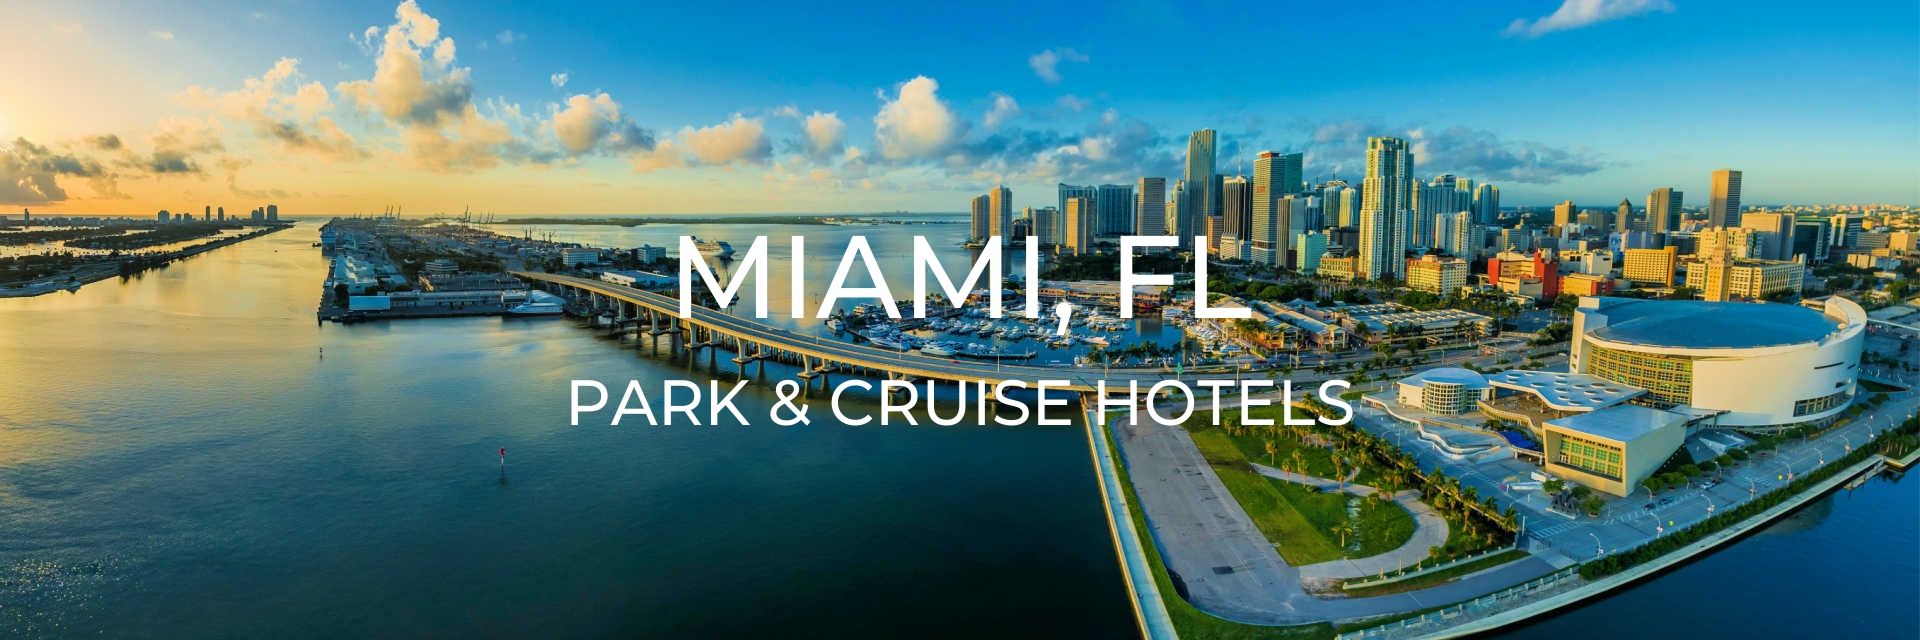 Buy Miami Hotels Online Voucher Code Printables Codes 2020